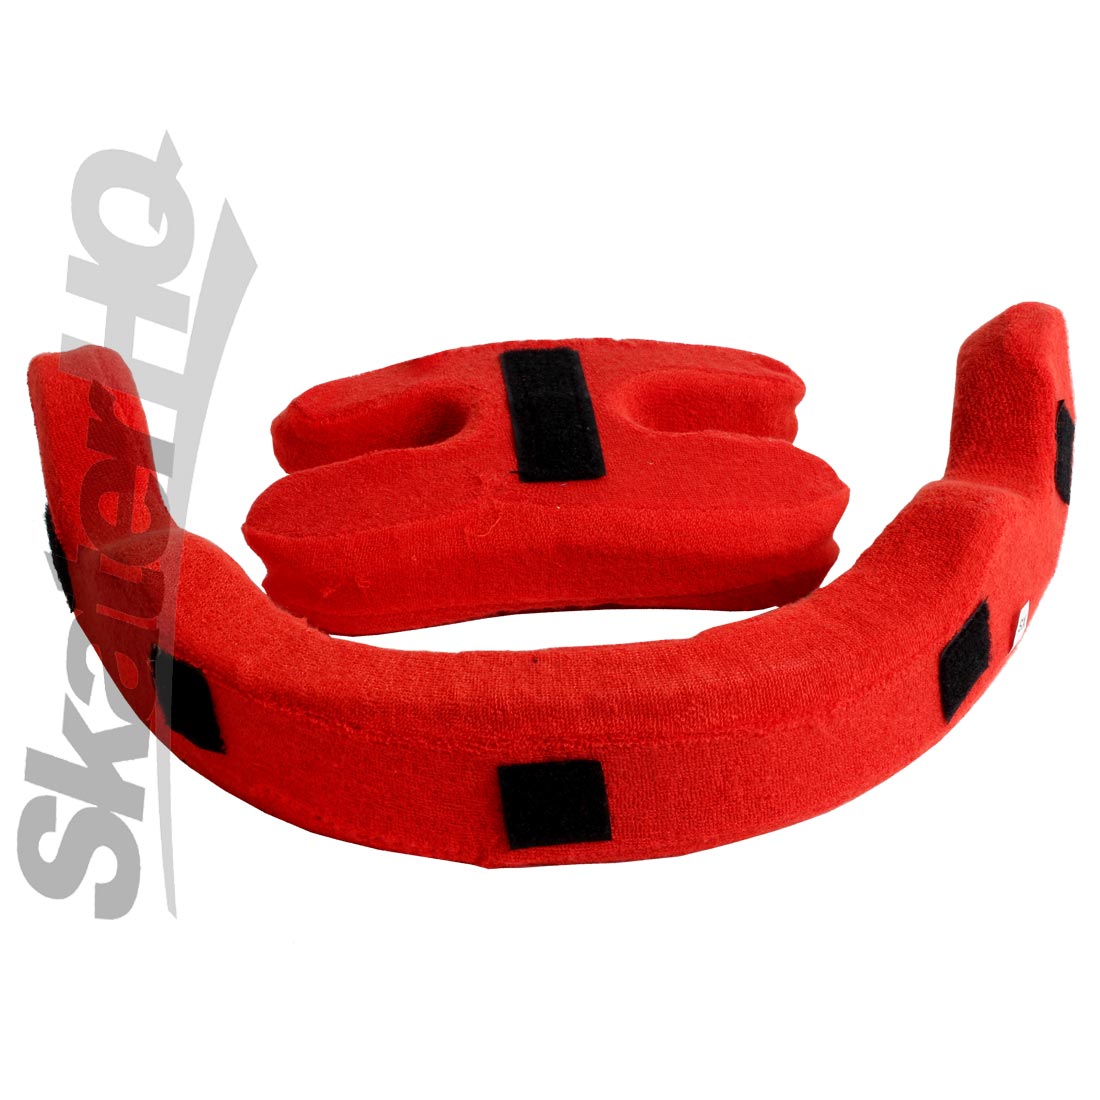 Triple 8 Sweatsaver Liner - Red - XS Helmet liners